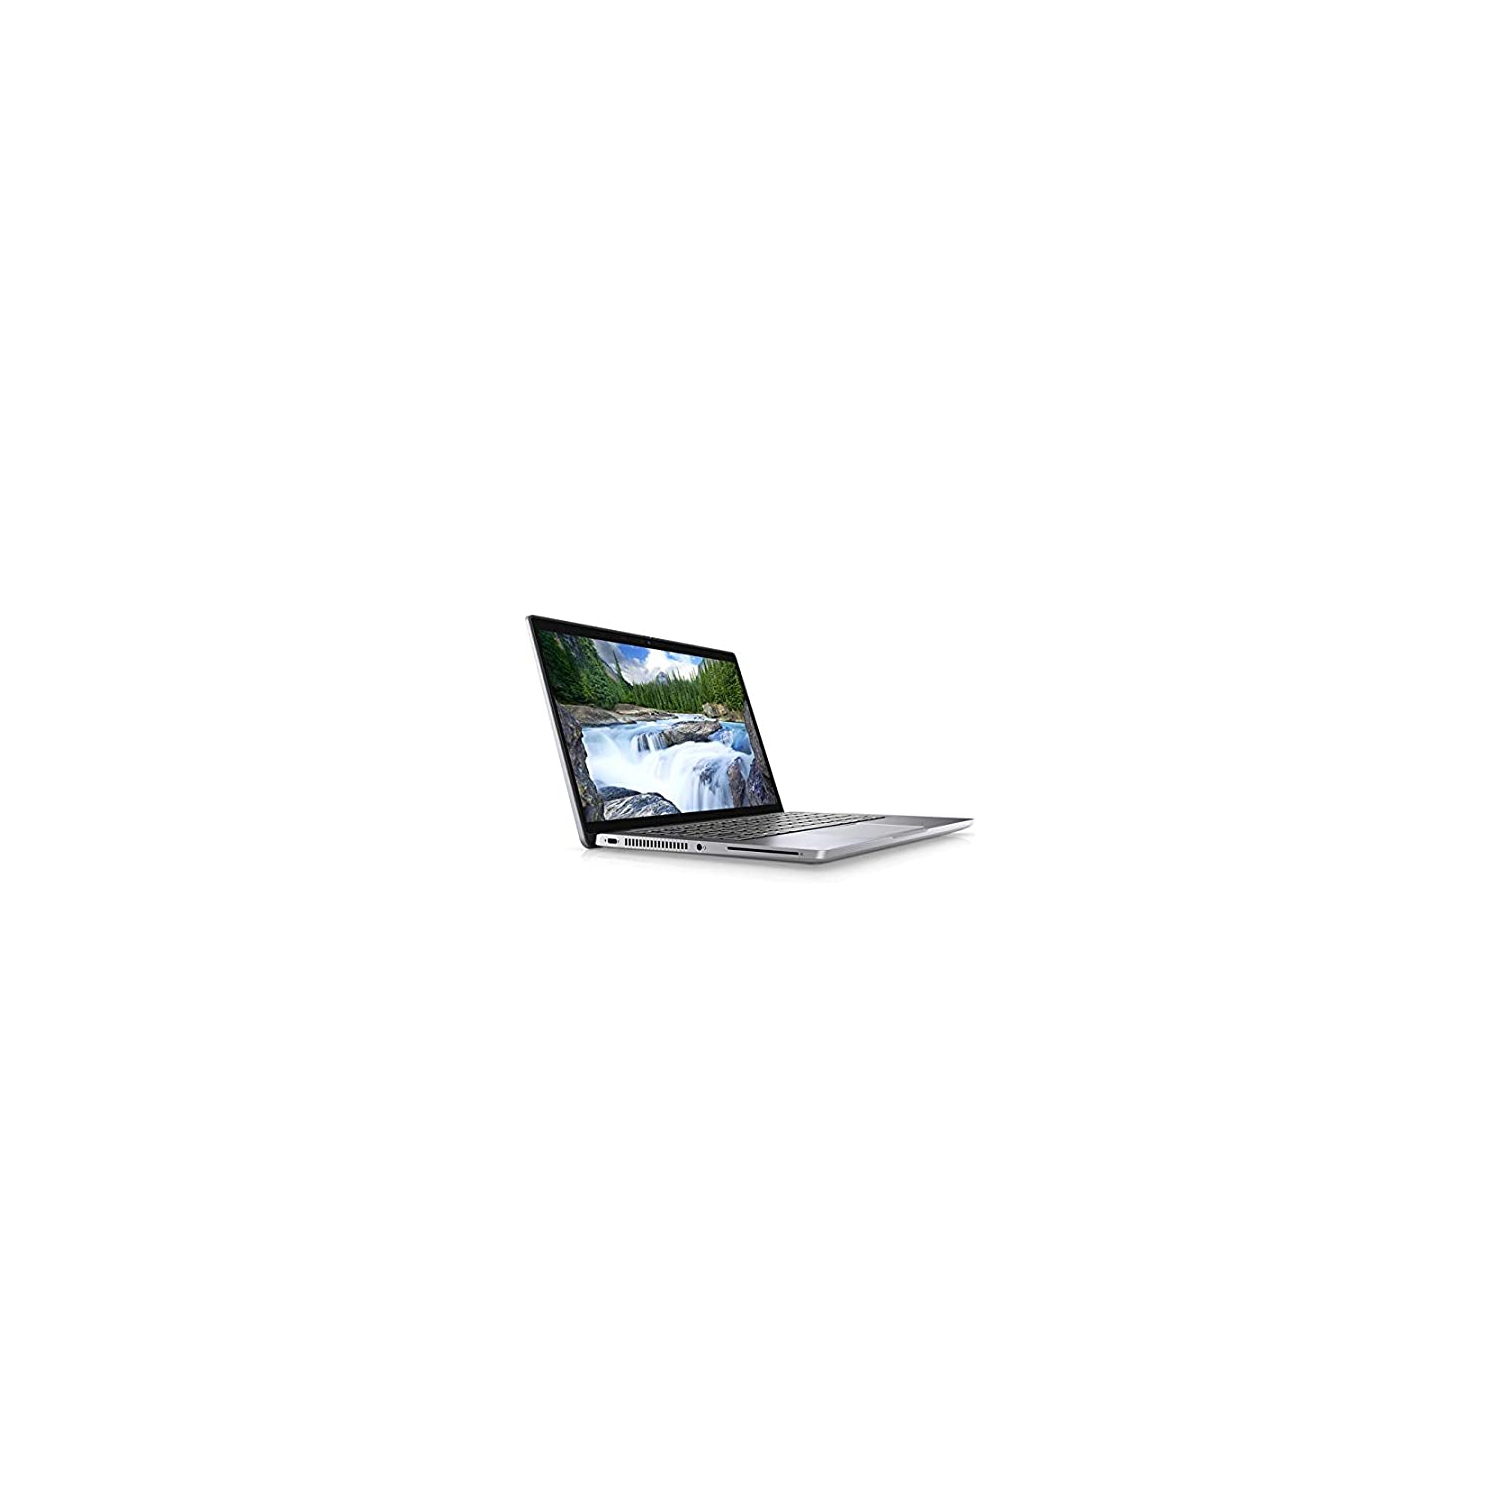 Dell Latitude 7000 7320 Laptop (2021) | 13.3" FHD | Core i5 - 256GB SSD - 8GB RAM | 4 Cores @ 4.4 GHz - 11th Gen CPU